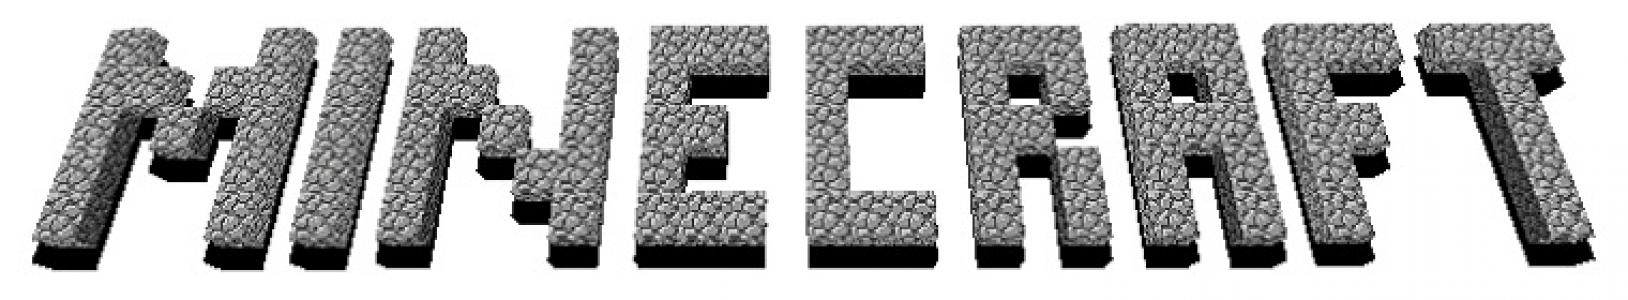 Minecraft: PlayStation 4 Edition banner